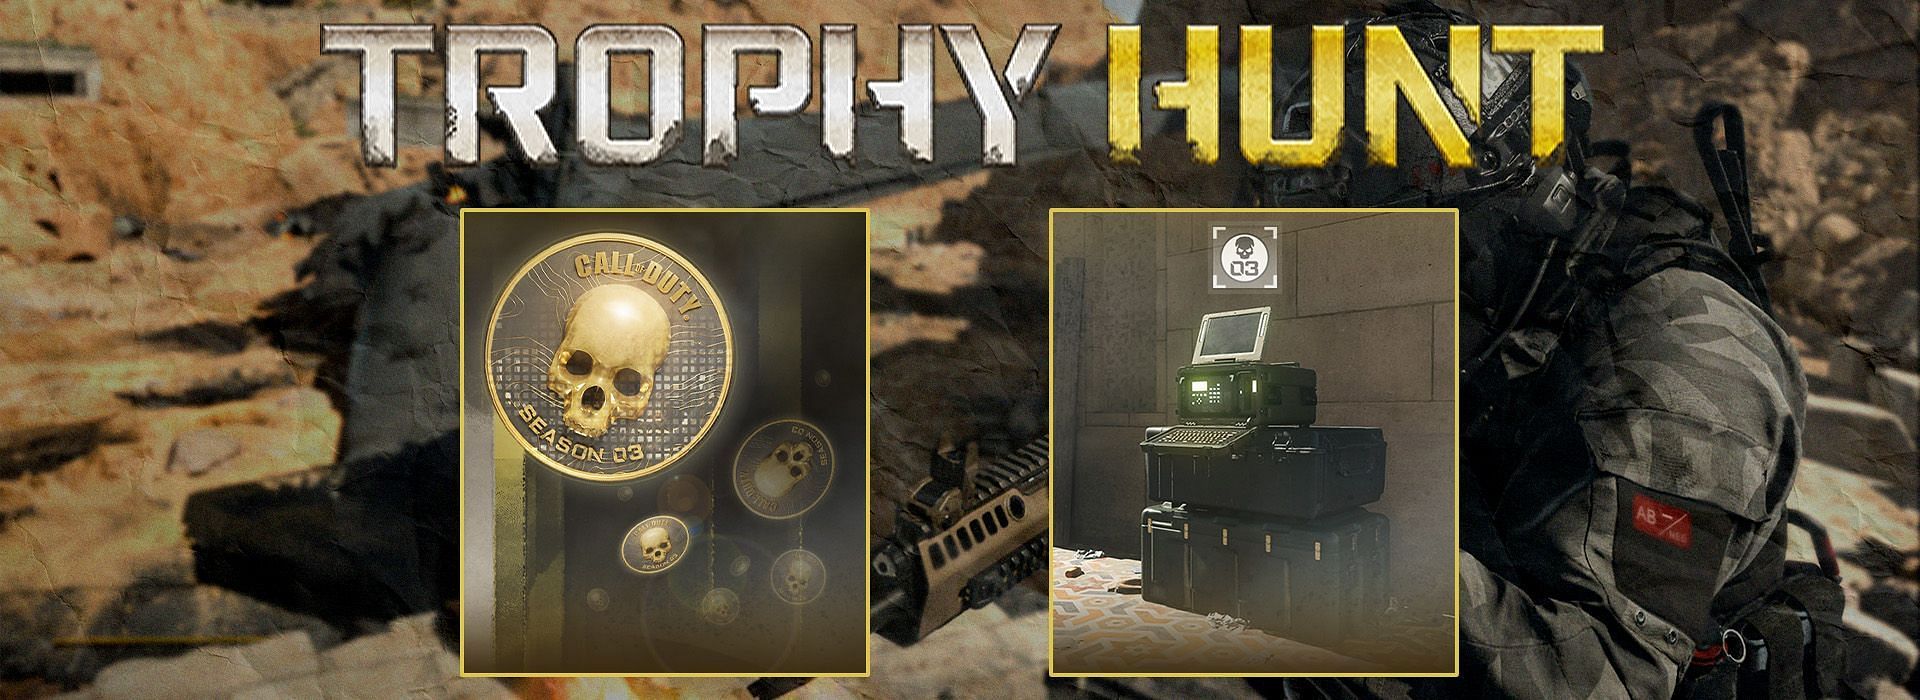 Trophy Hunt event of Modern Warfare 2 Season 3 (Image via Activision)  